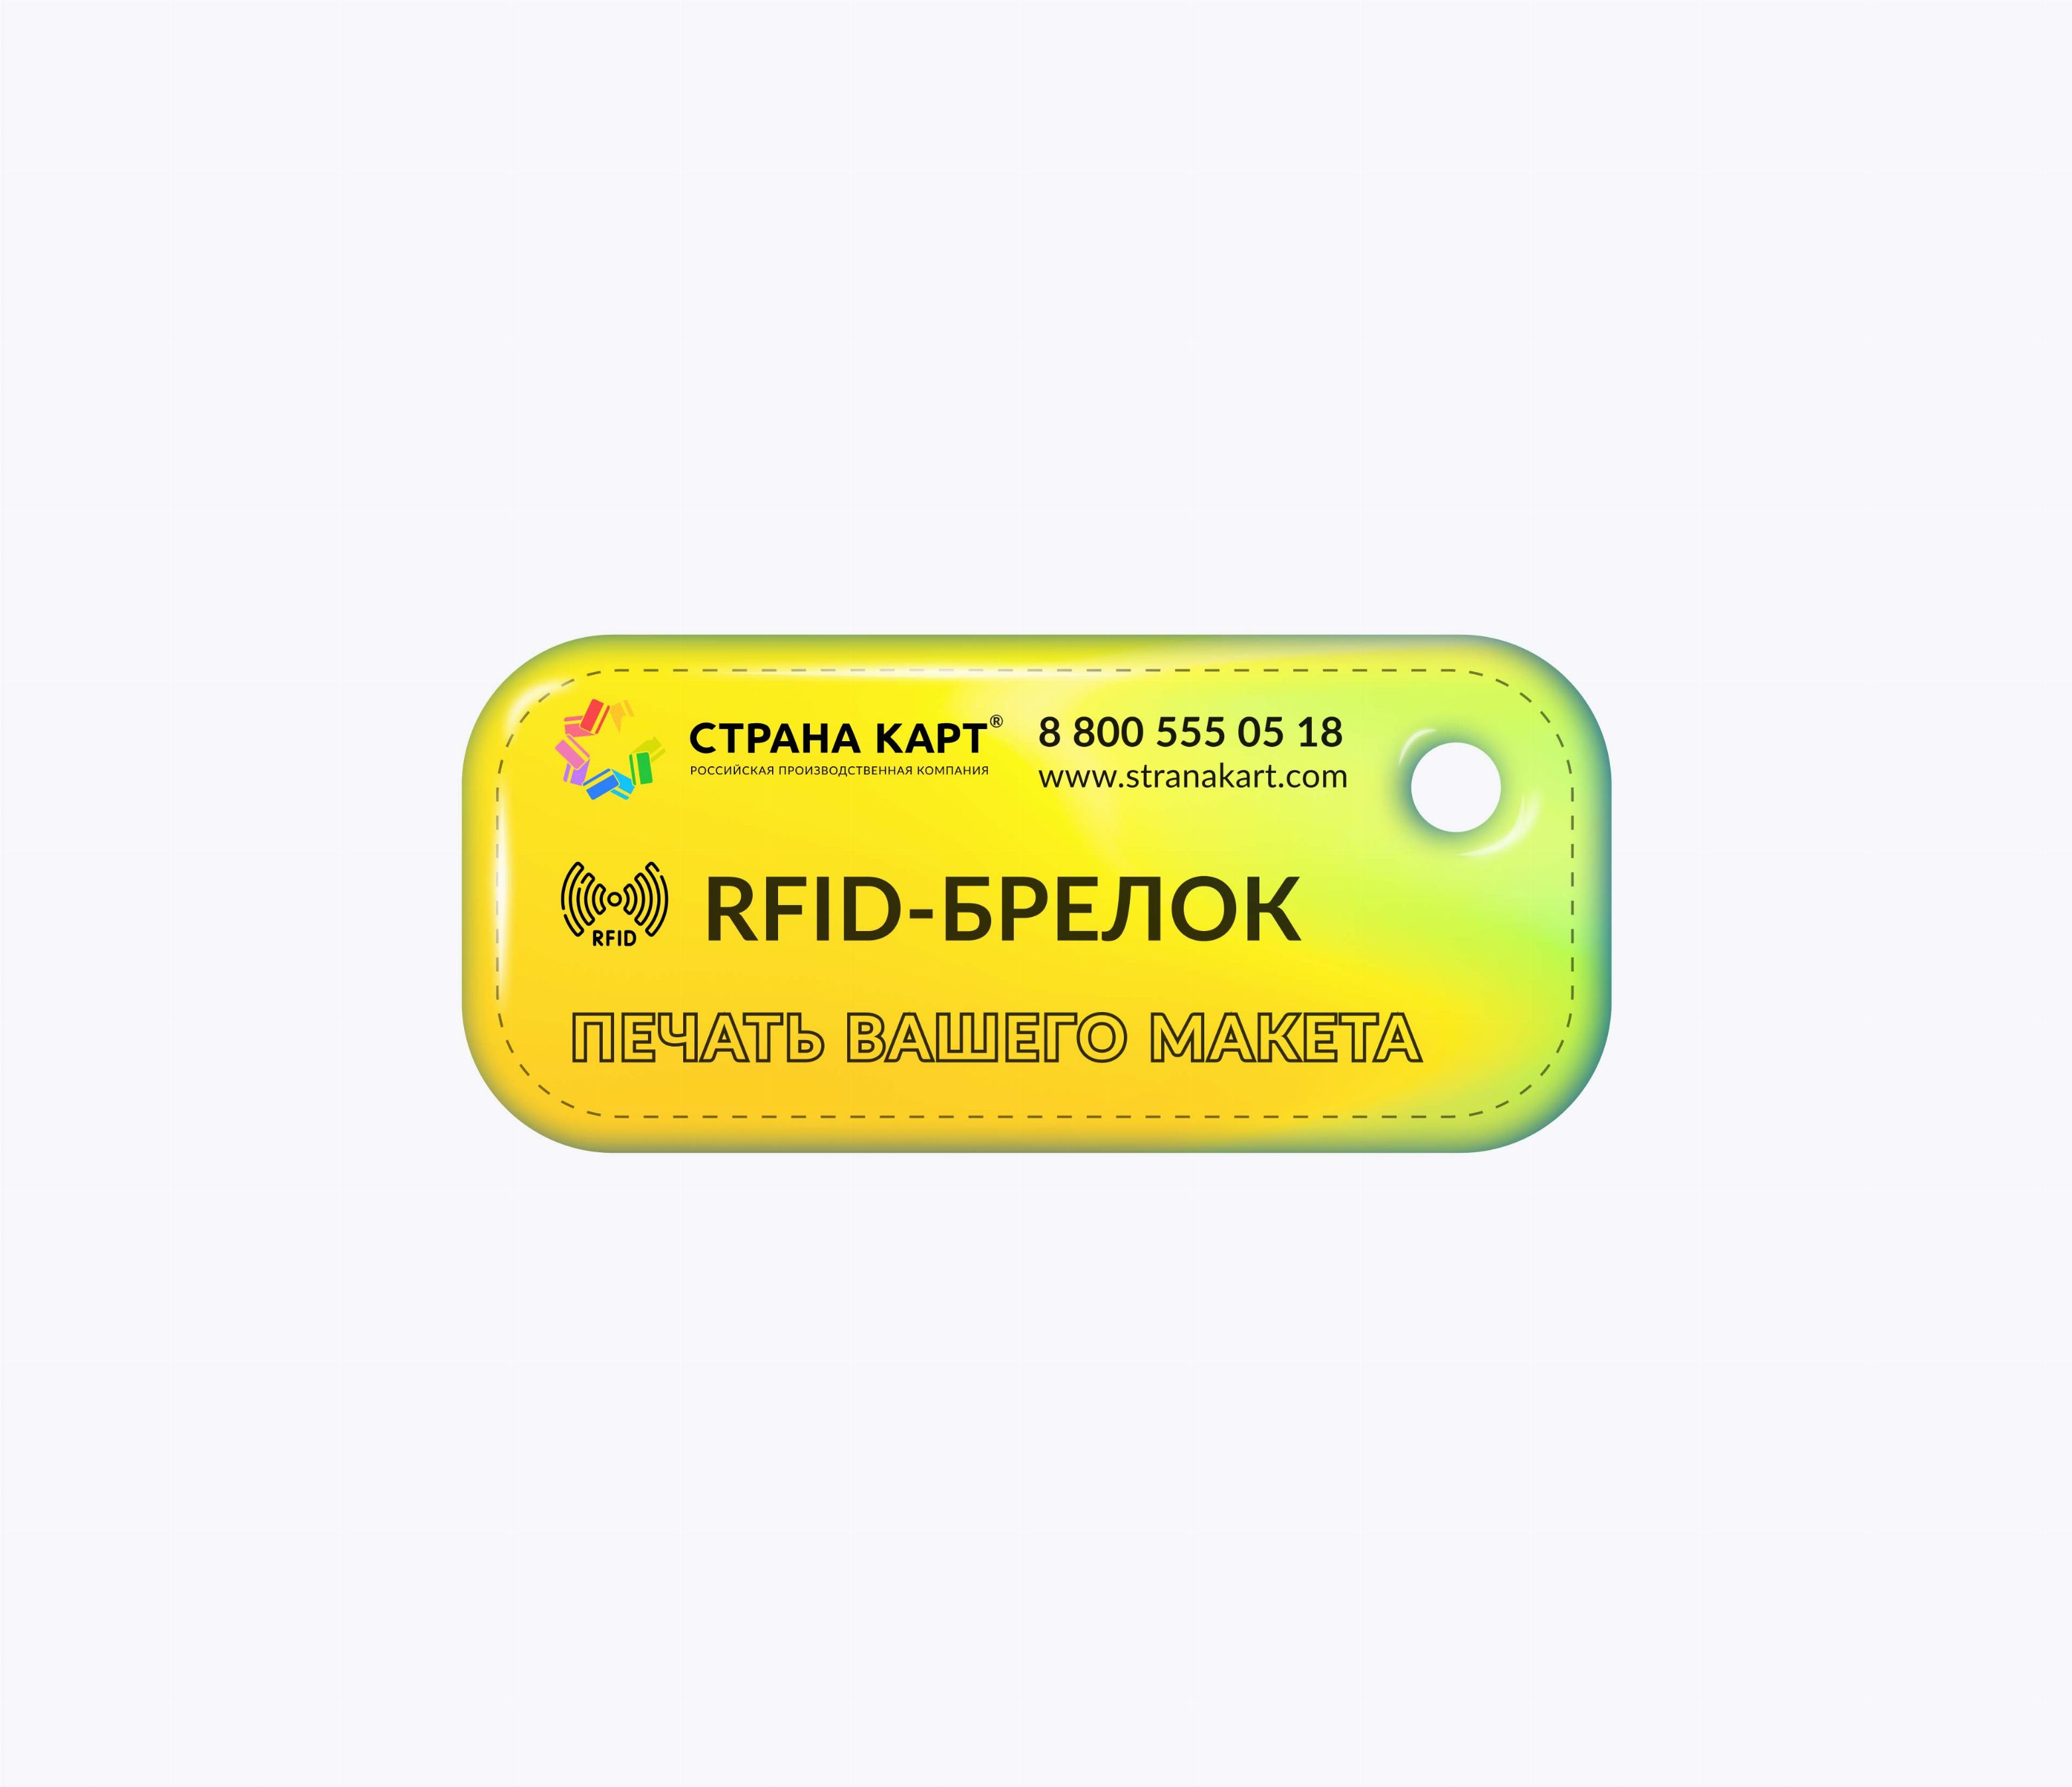 Прямоугольные мини RFID-брелоки NEOKEY® с чипом NXP MIFARE Plus SE 1k 7 byte UID RFID-брелоки NEOKEY® с чипом NXP MIFARE Plus SE 1k 7 byte UID и вашим логотипом